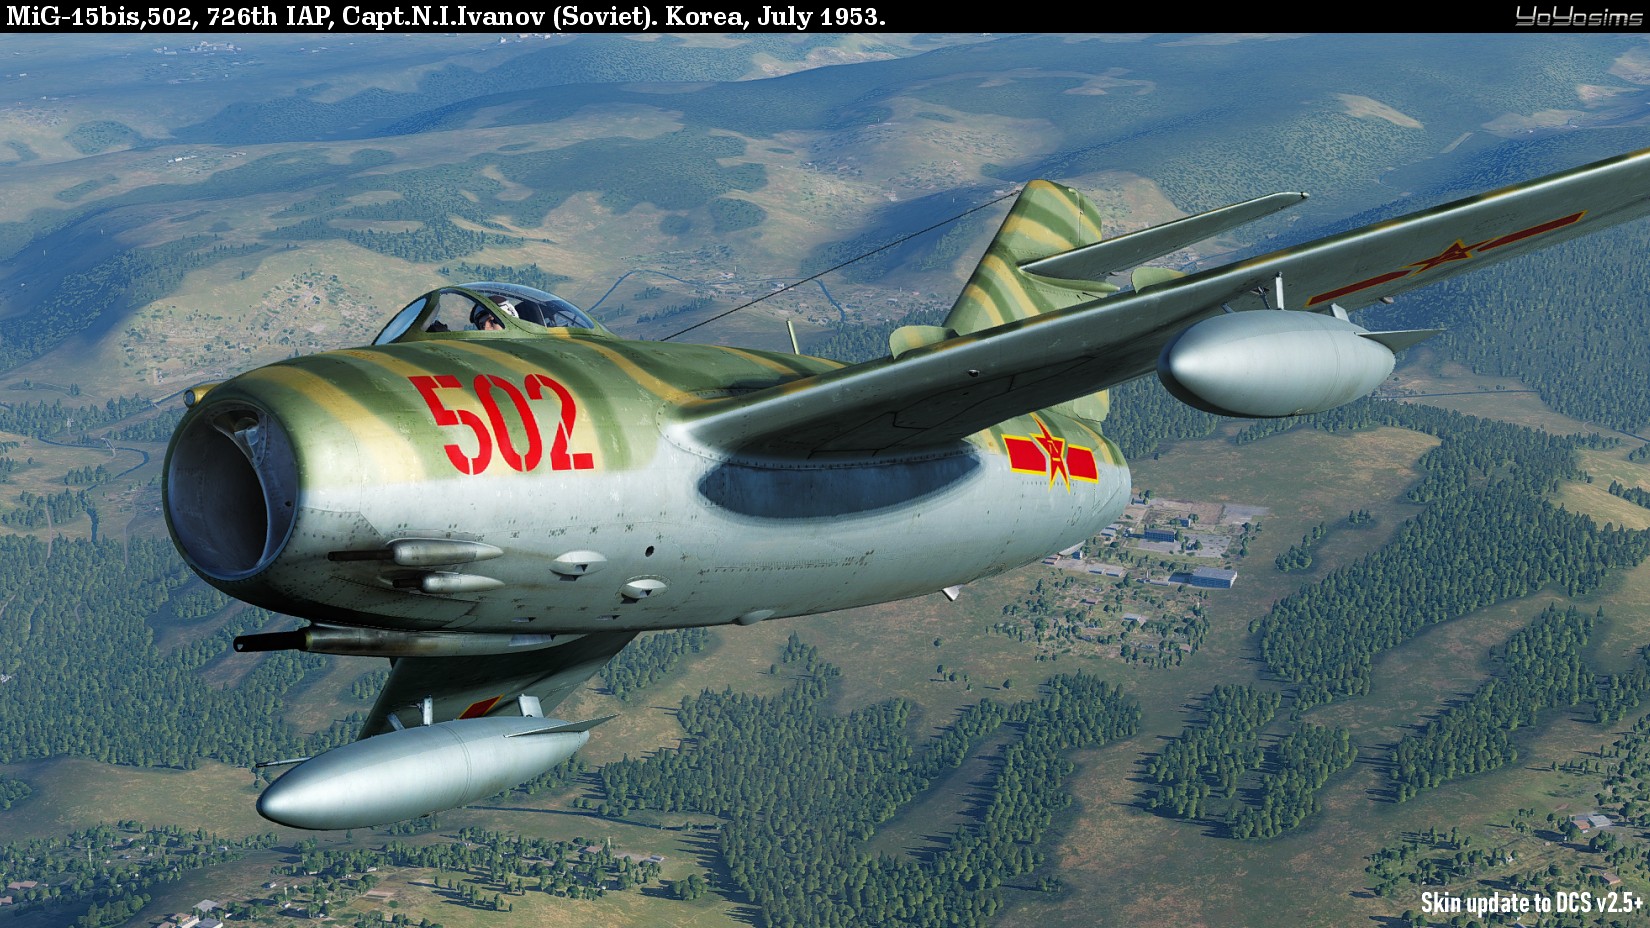 MiG-15bis, 502, Pilot - Capt.N.I.Ivanov (Soviet). Korea, July 1953